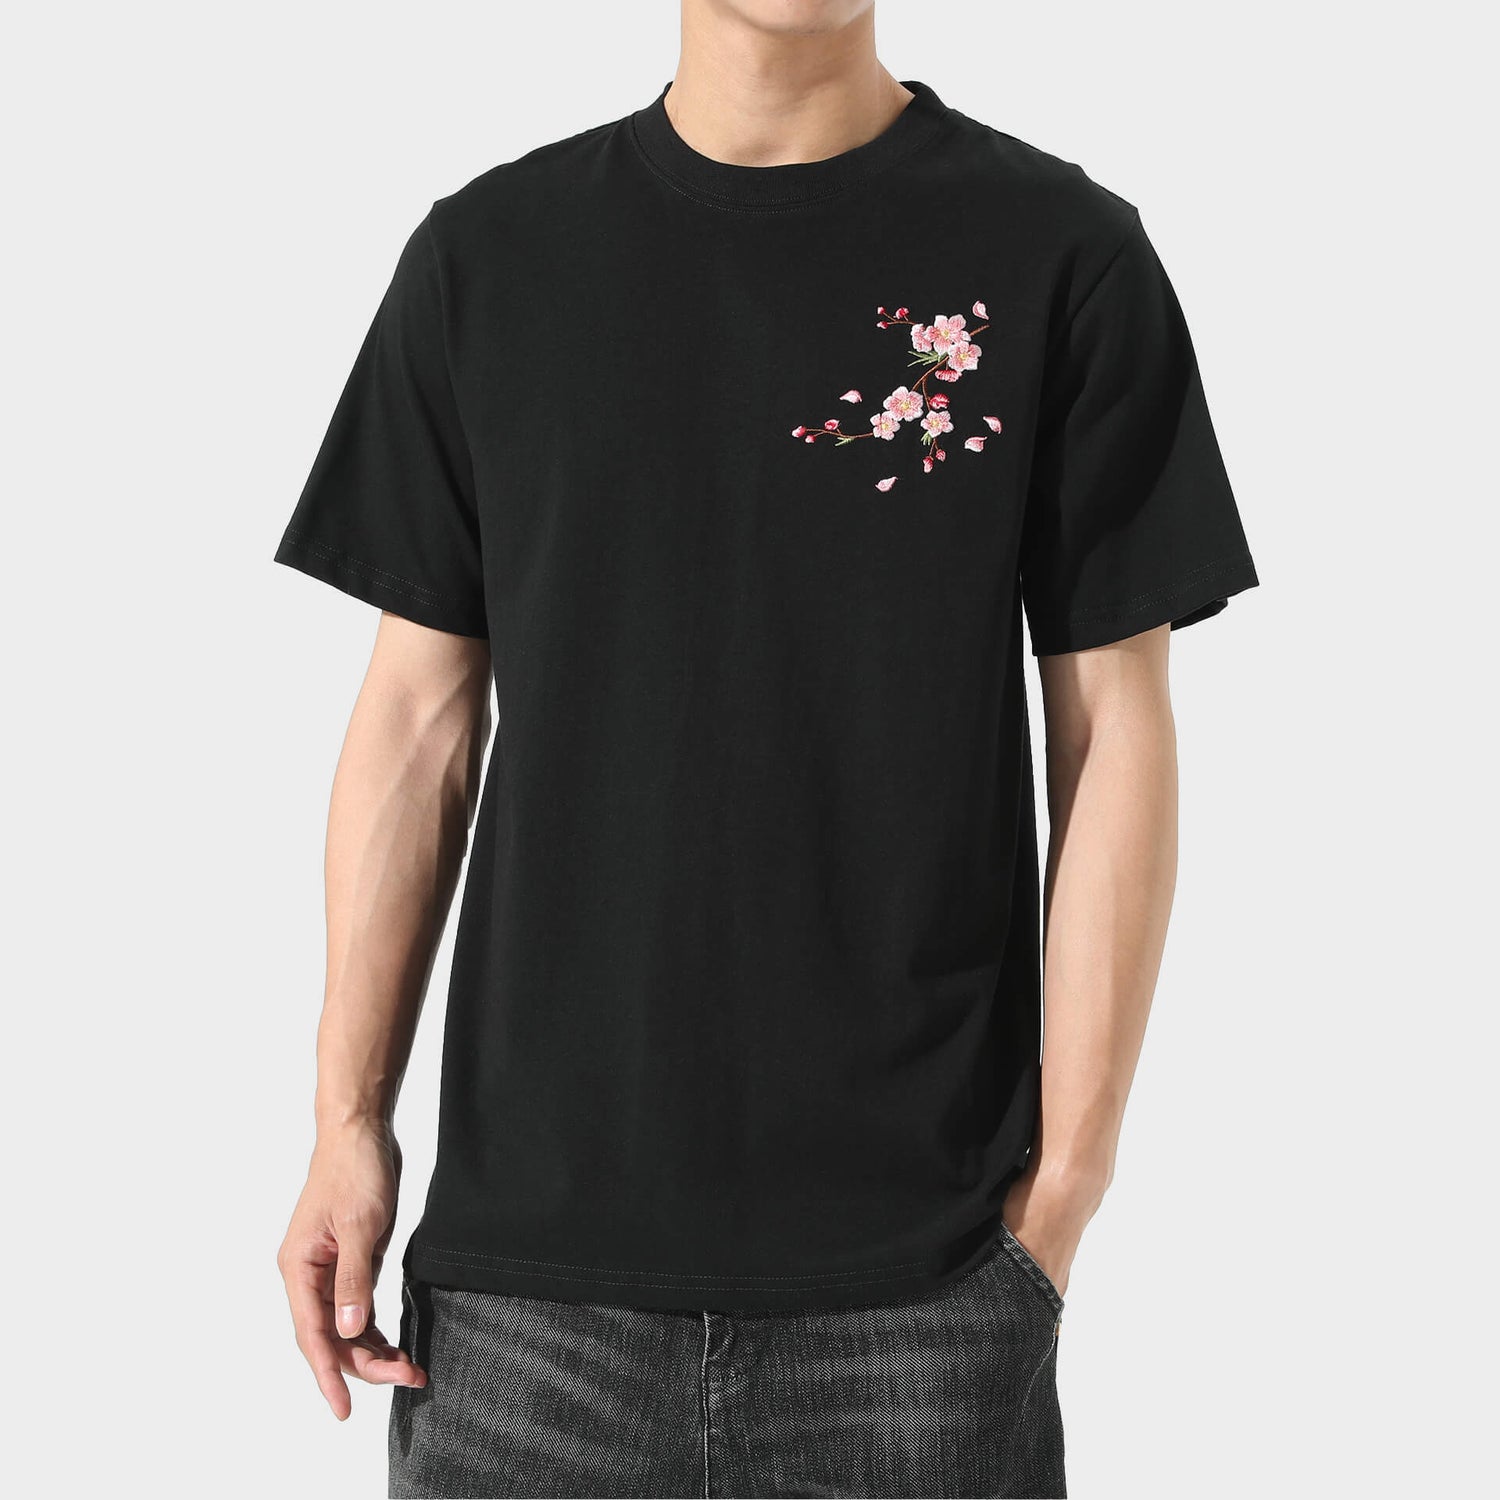 Sakura Embroidered Shirt